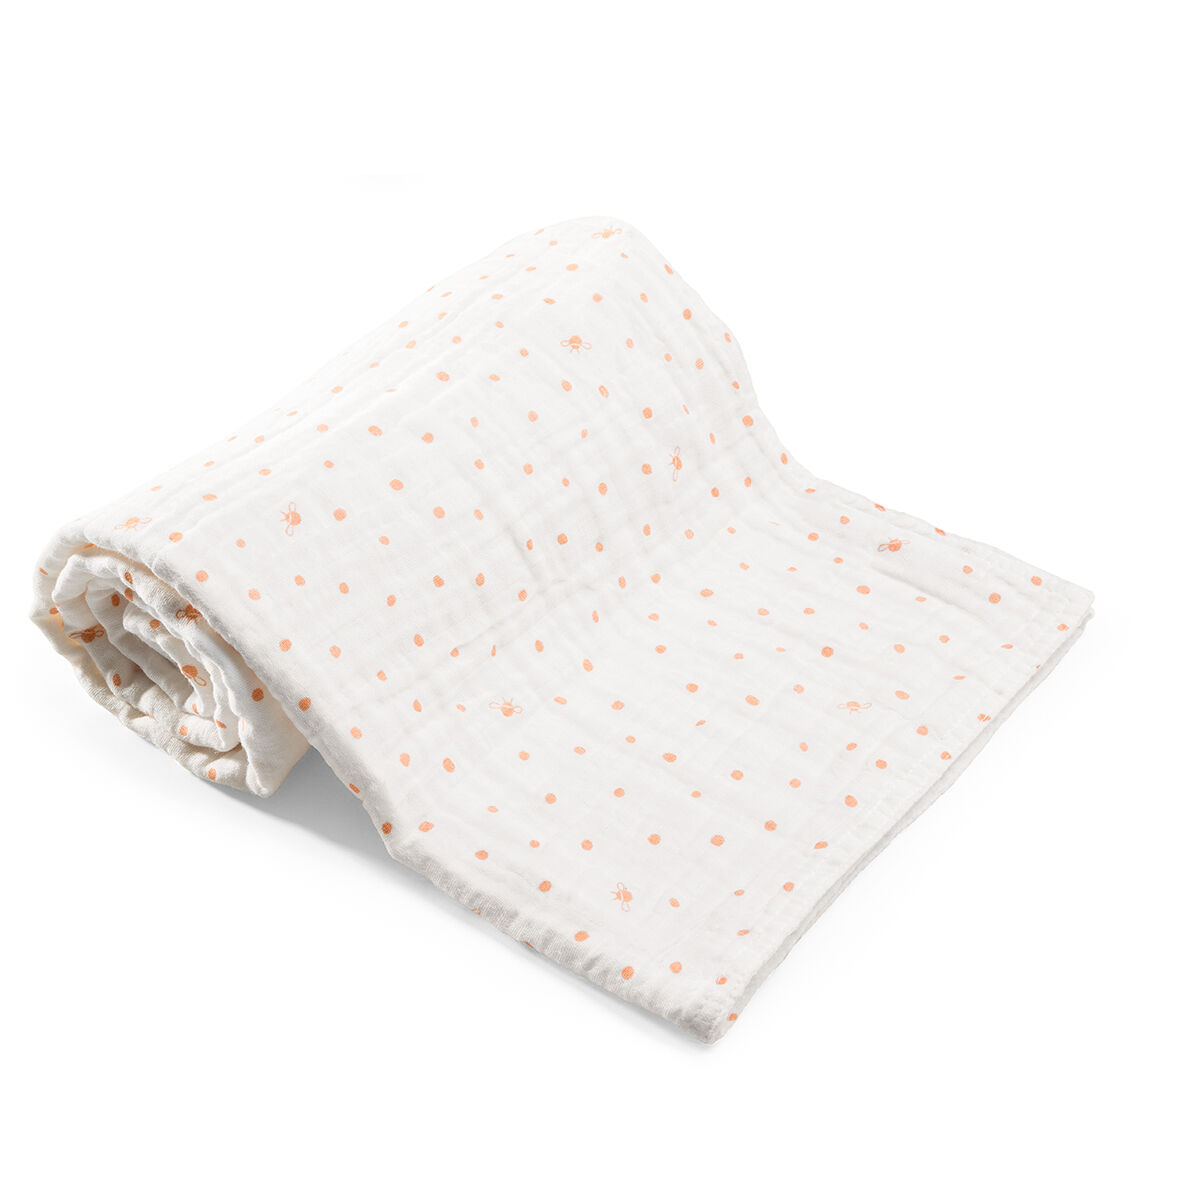 Stokke® Blanket Muslin Cotton, Coral Bee, mainview